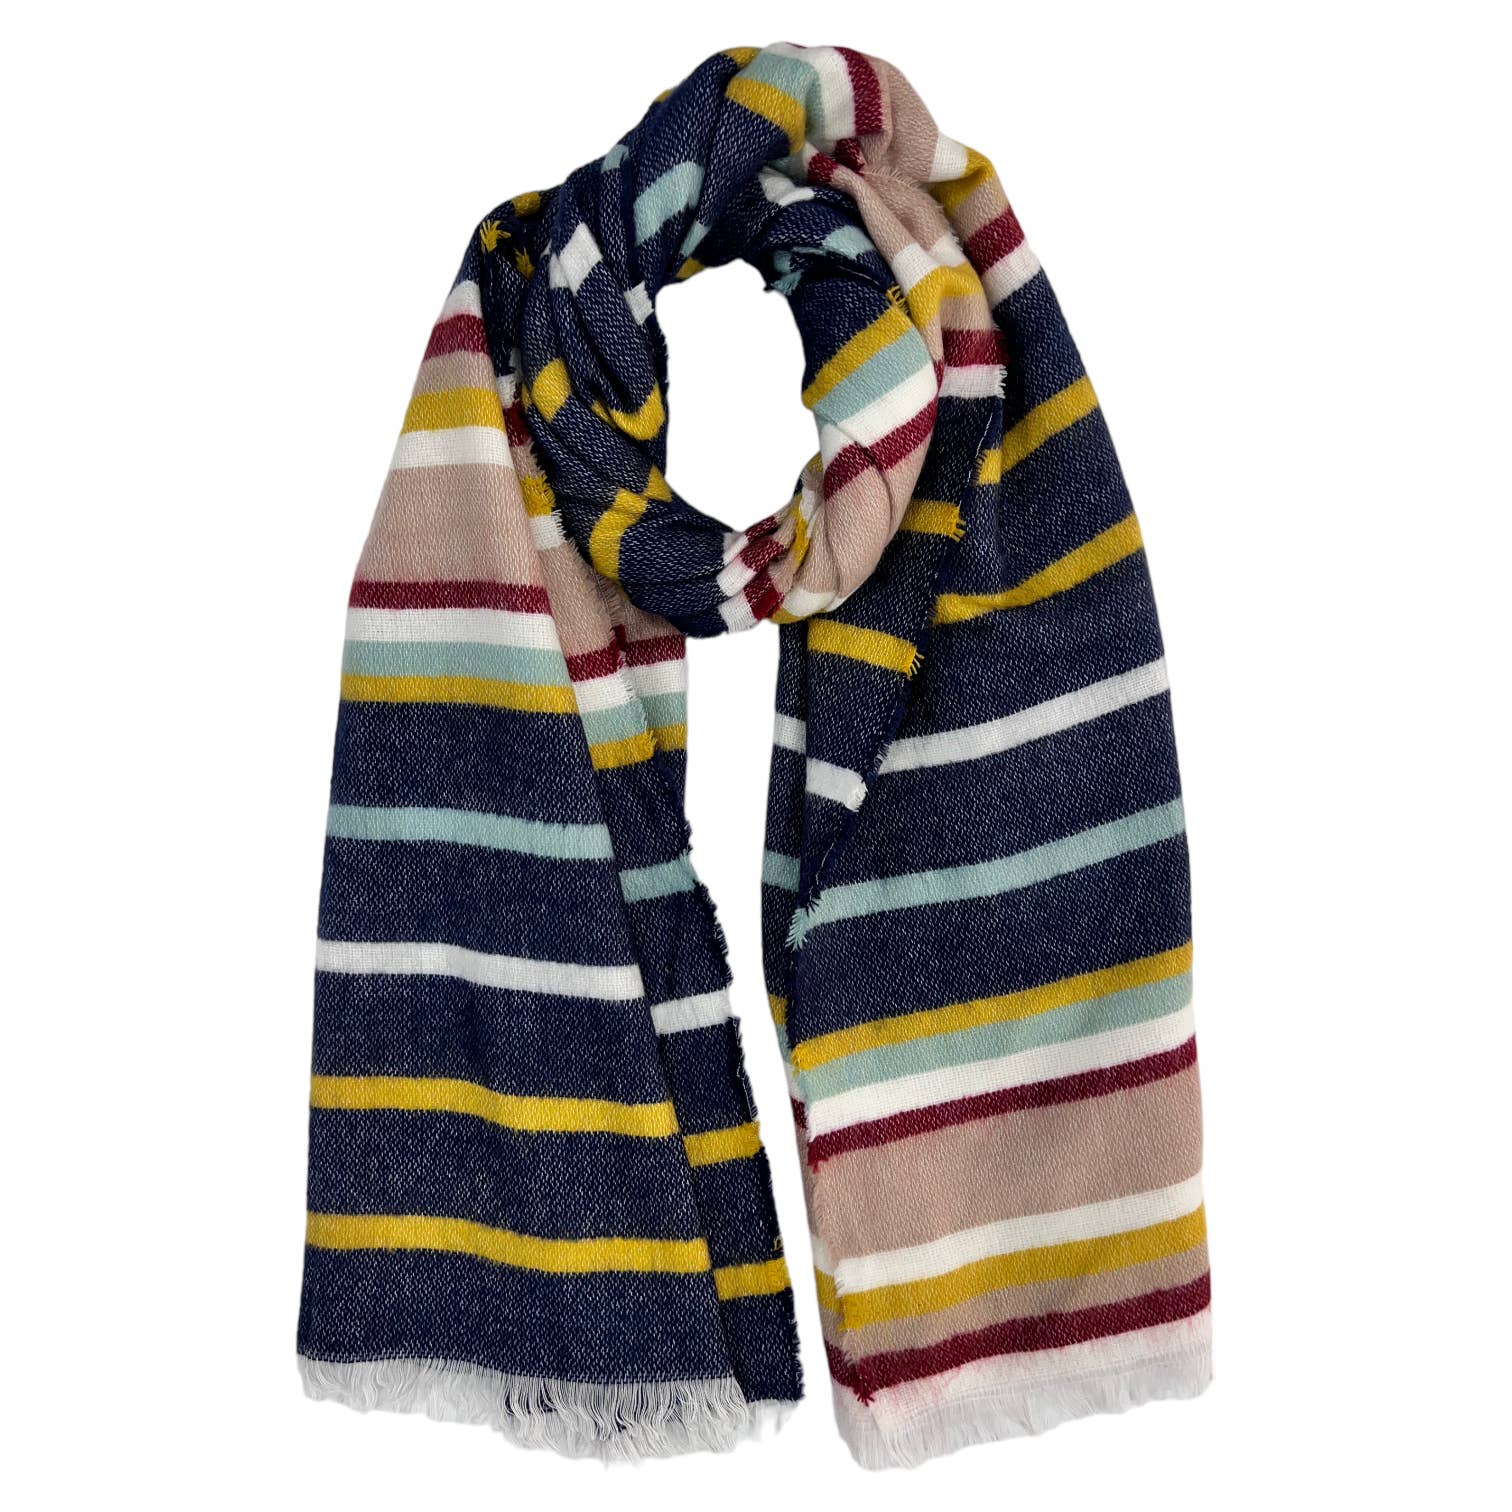 Striped winter scarf - The Nancy Smillie Shop - Art, Jewellery & Designer Gifts Glasgow